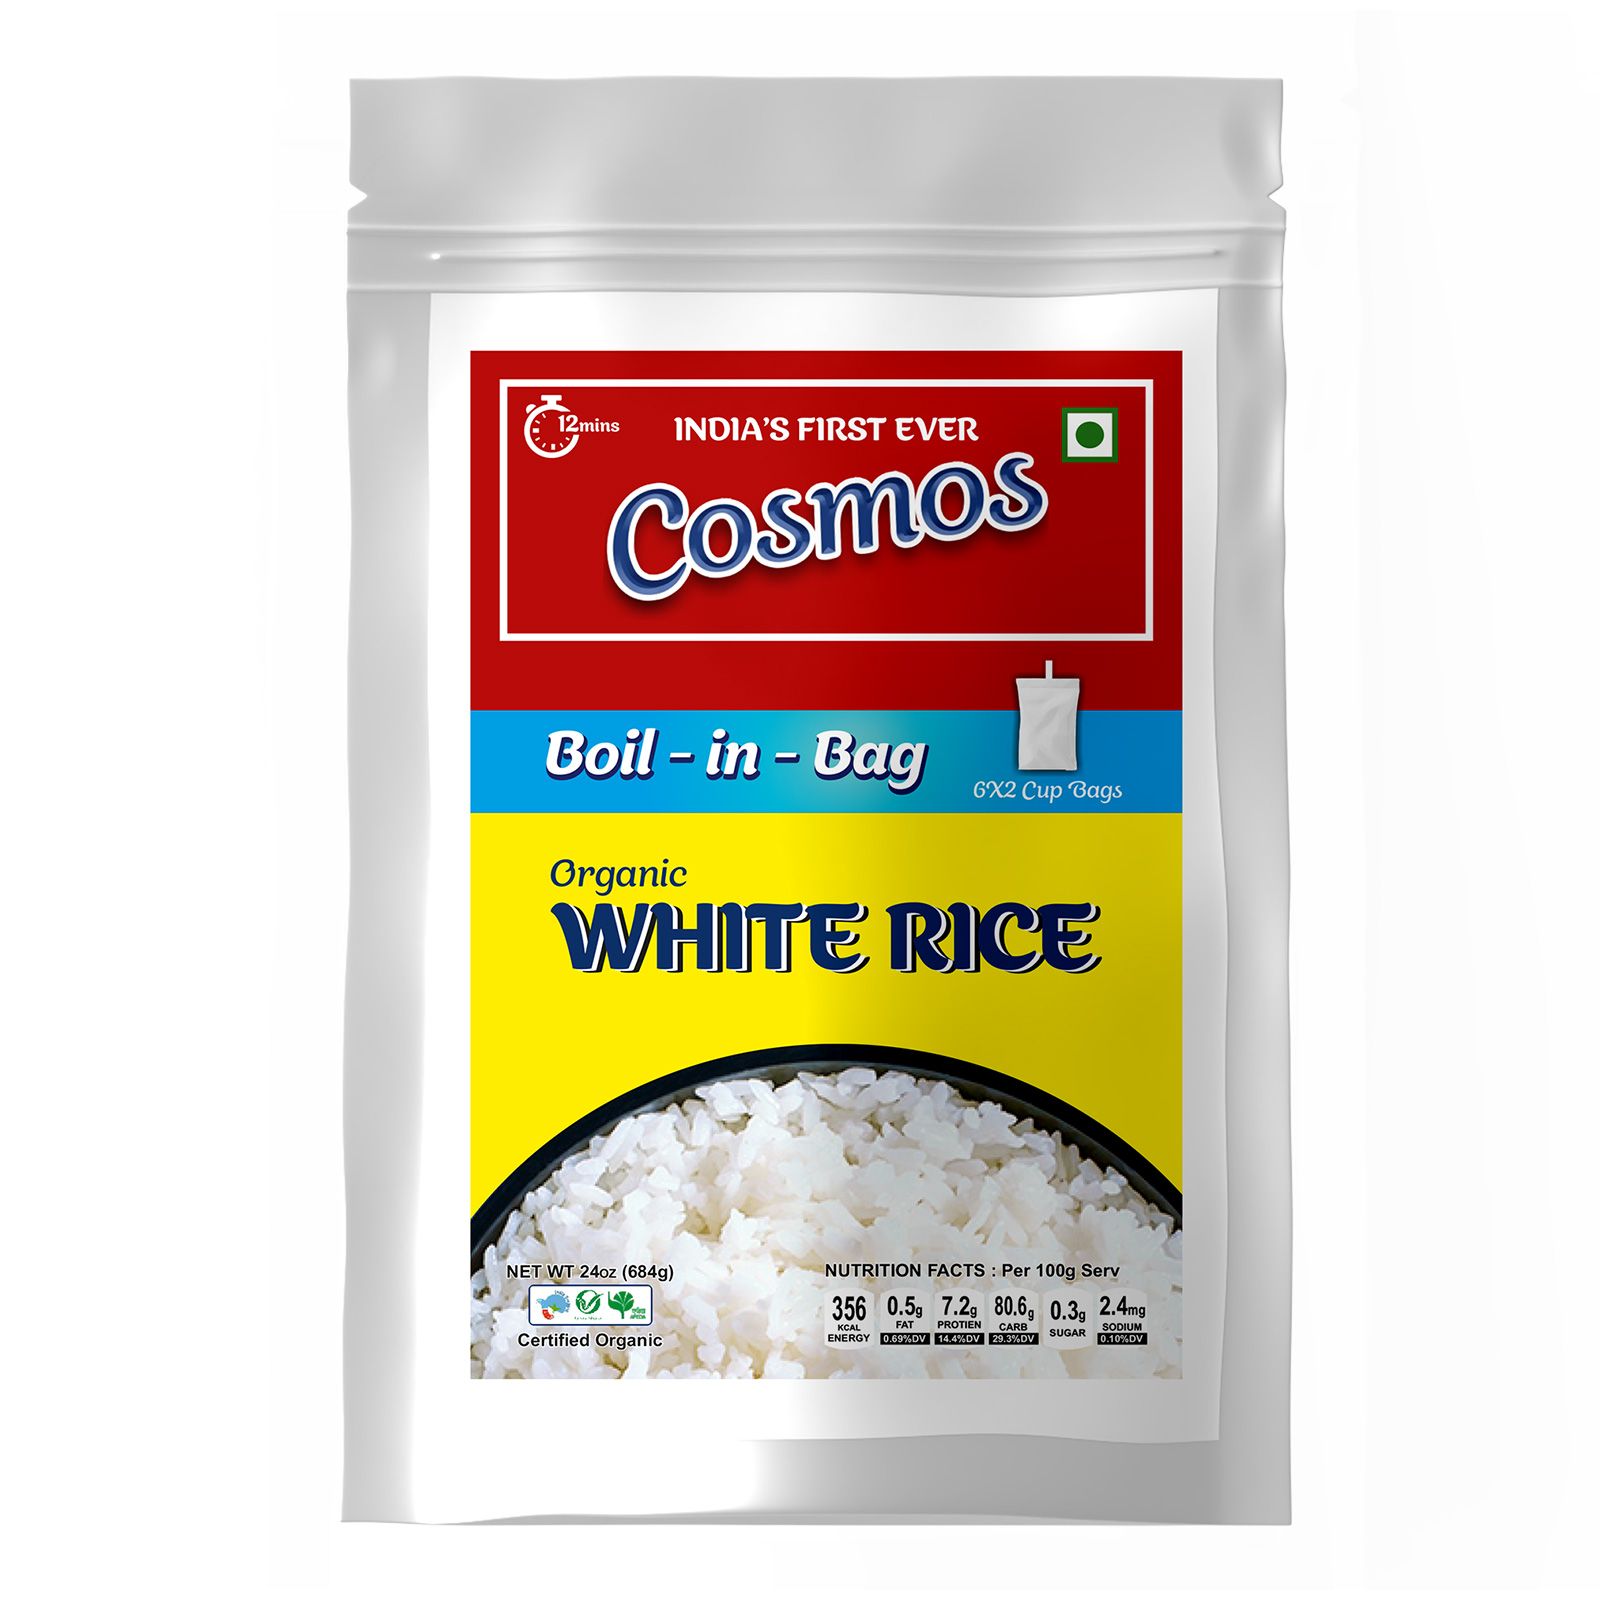 Cosmos Boil-in-Bag Organic White Rice (24oz) Ready-to-Cook Sona Masoori Premium